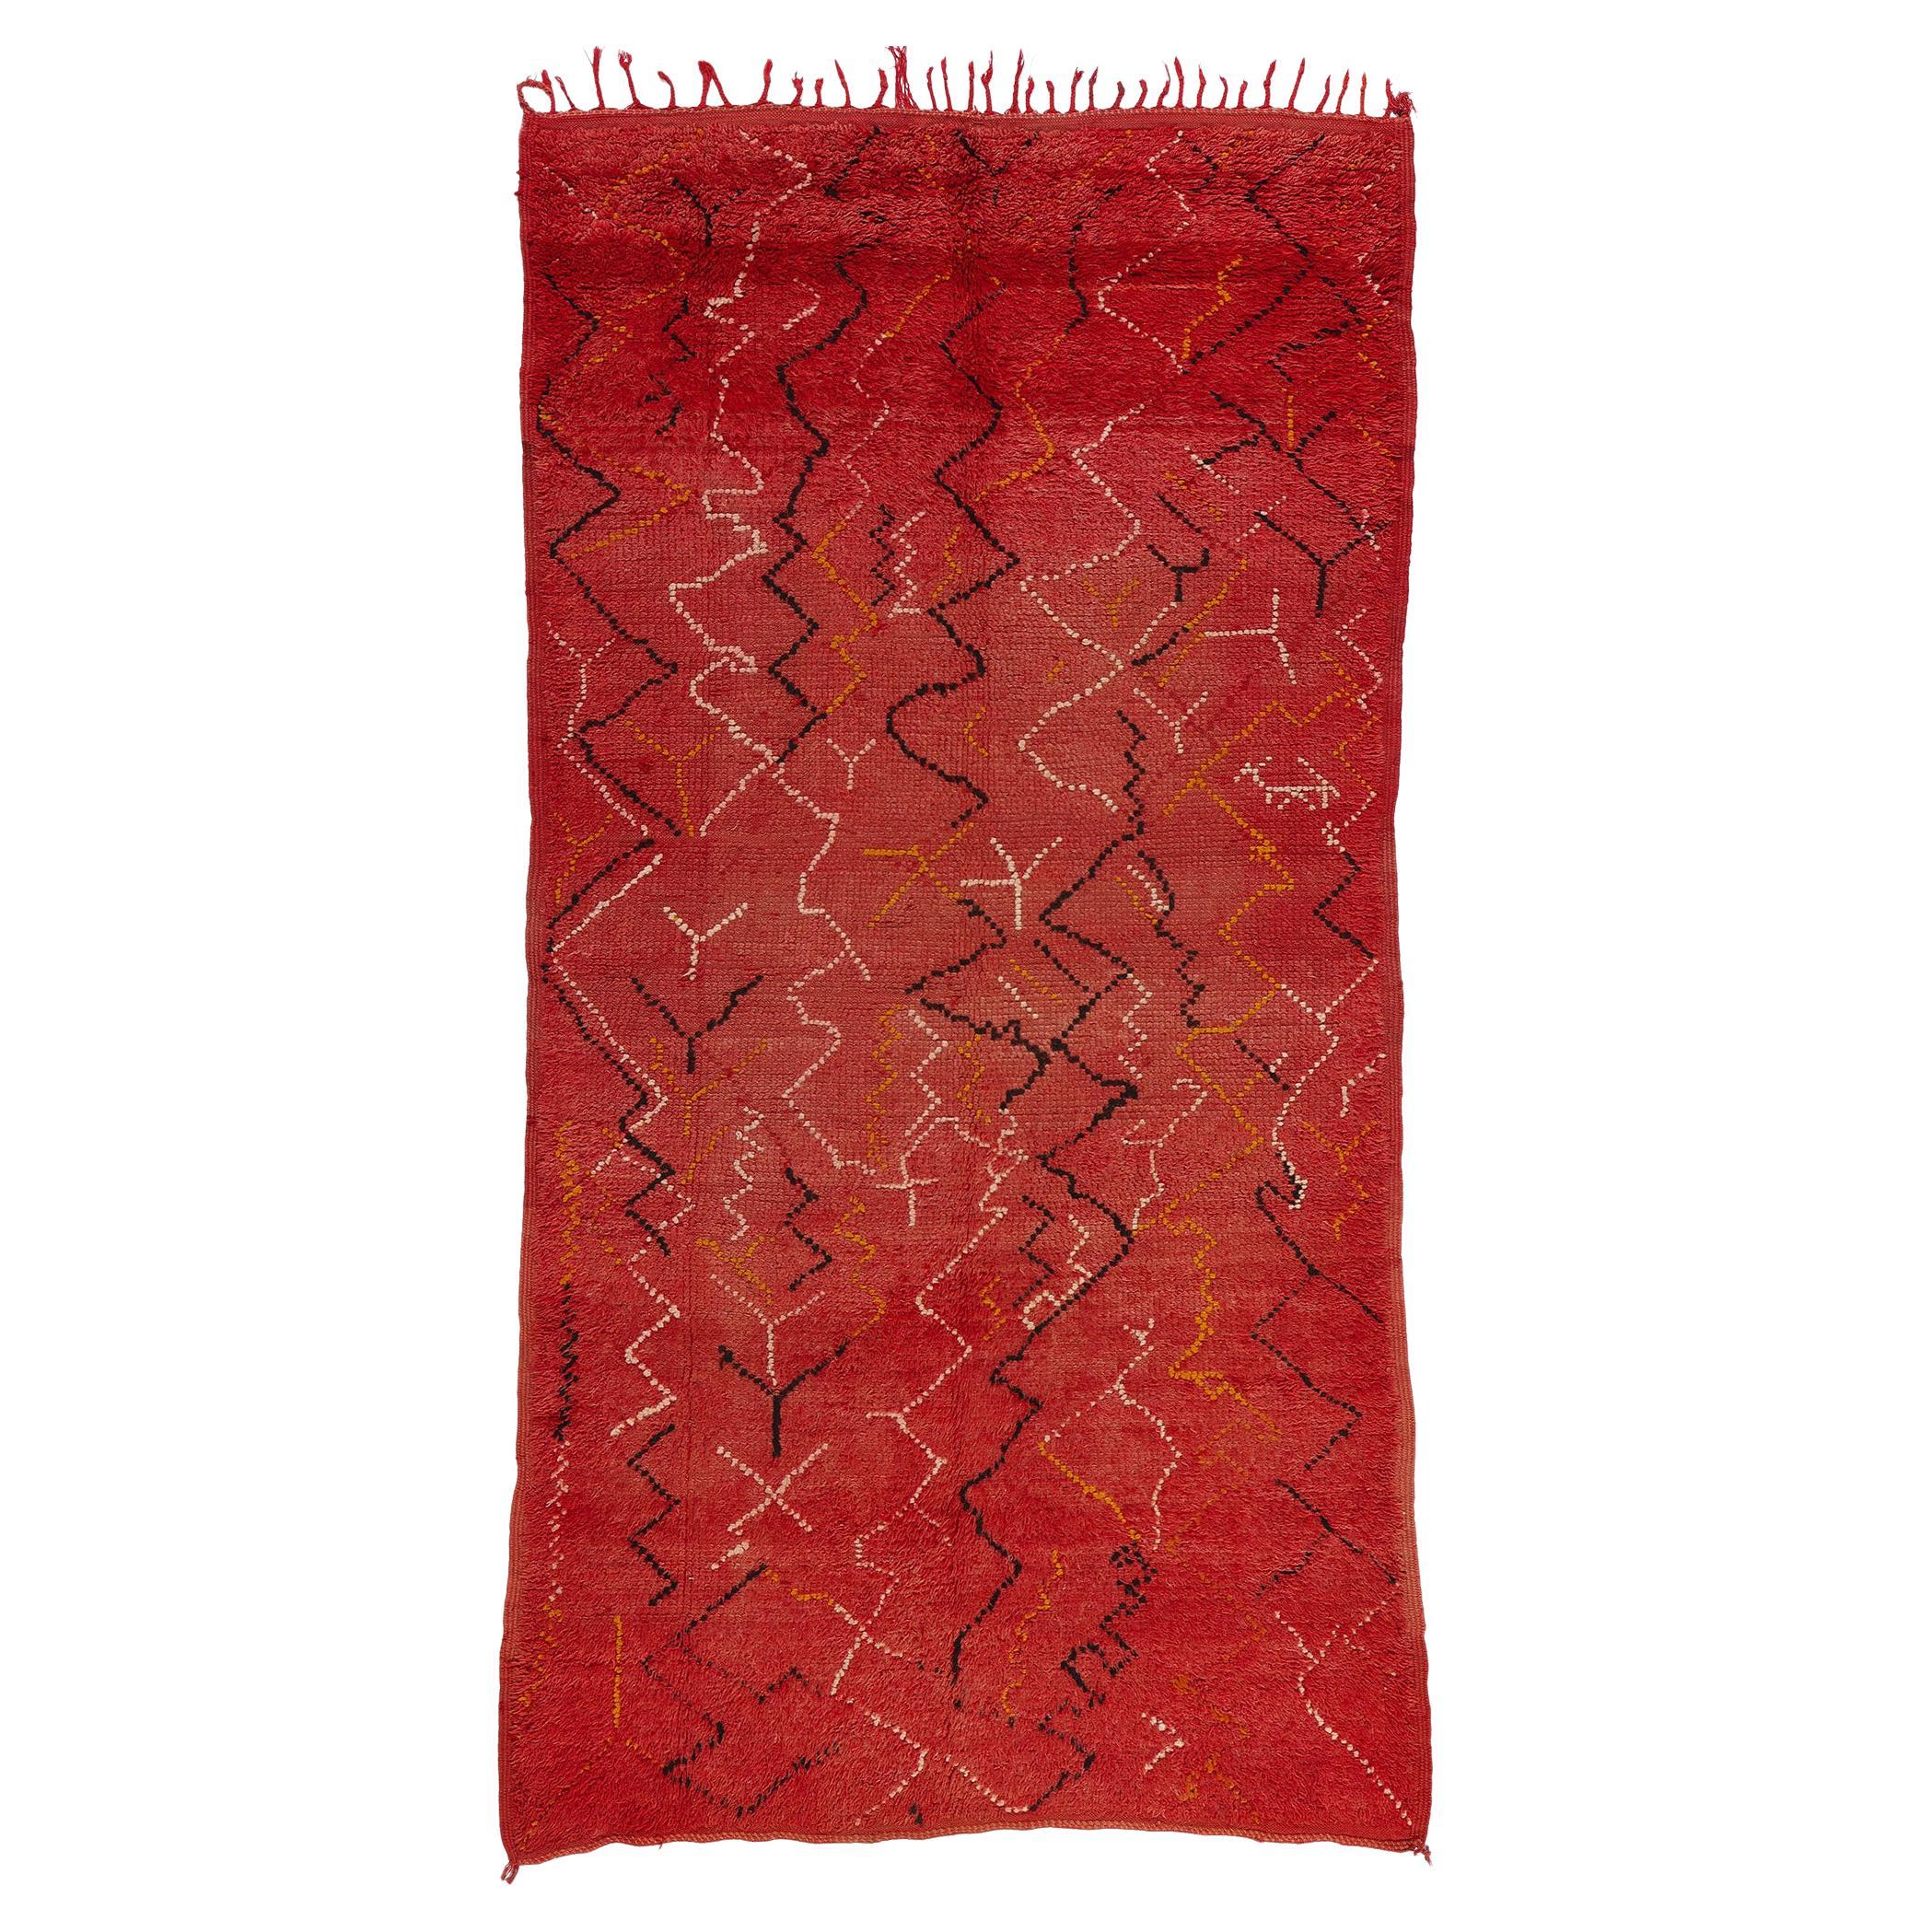 Vintage Talsint Moroccan Rug, Midcentury Modern Meets Tribal Enchantment